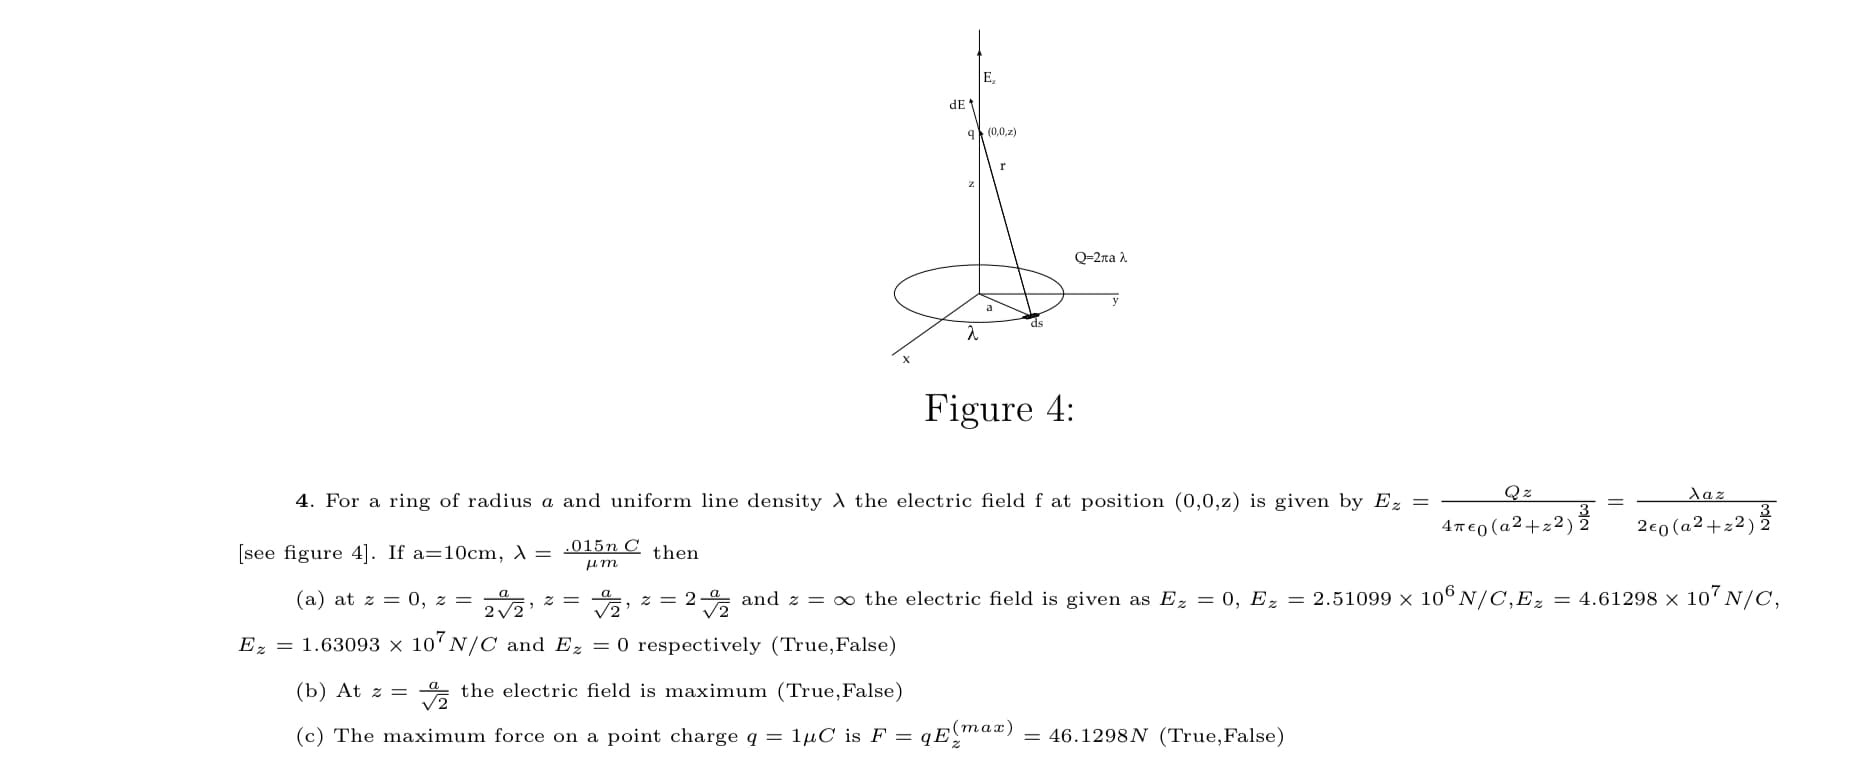 E,
dE
9 (0,0,z)
Q=2ra .
a
ds
Figure 4:
4. For a ring of radius a and uniform line density the electric field f at position (0,0,z) is given by Ez =
Qz
Xaz
3
4T€0 (a2+z2) 2
2e0 (a2+z2) 2
.015n C
[see figure 4]. If a=10cm, A
then
(a) at z = 0, z =
z = 2- and z = ∞ the electric field is given as Ez = 0, Ez = 2.51099 × 106 N/C,Ez
= 4.61298 x 107 N/C,
a
= 2
V2
Ez = 1.63093 x 10 N/C and Ez = 0 respectively (True,False)
(b) At z =
V2
* the electric field is maximum (True,False)
(c) The maximum force on a point charge q = 1µC is F = qE"max)
= 46.1298N (True,False)
